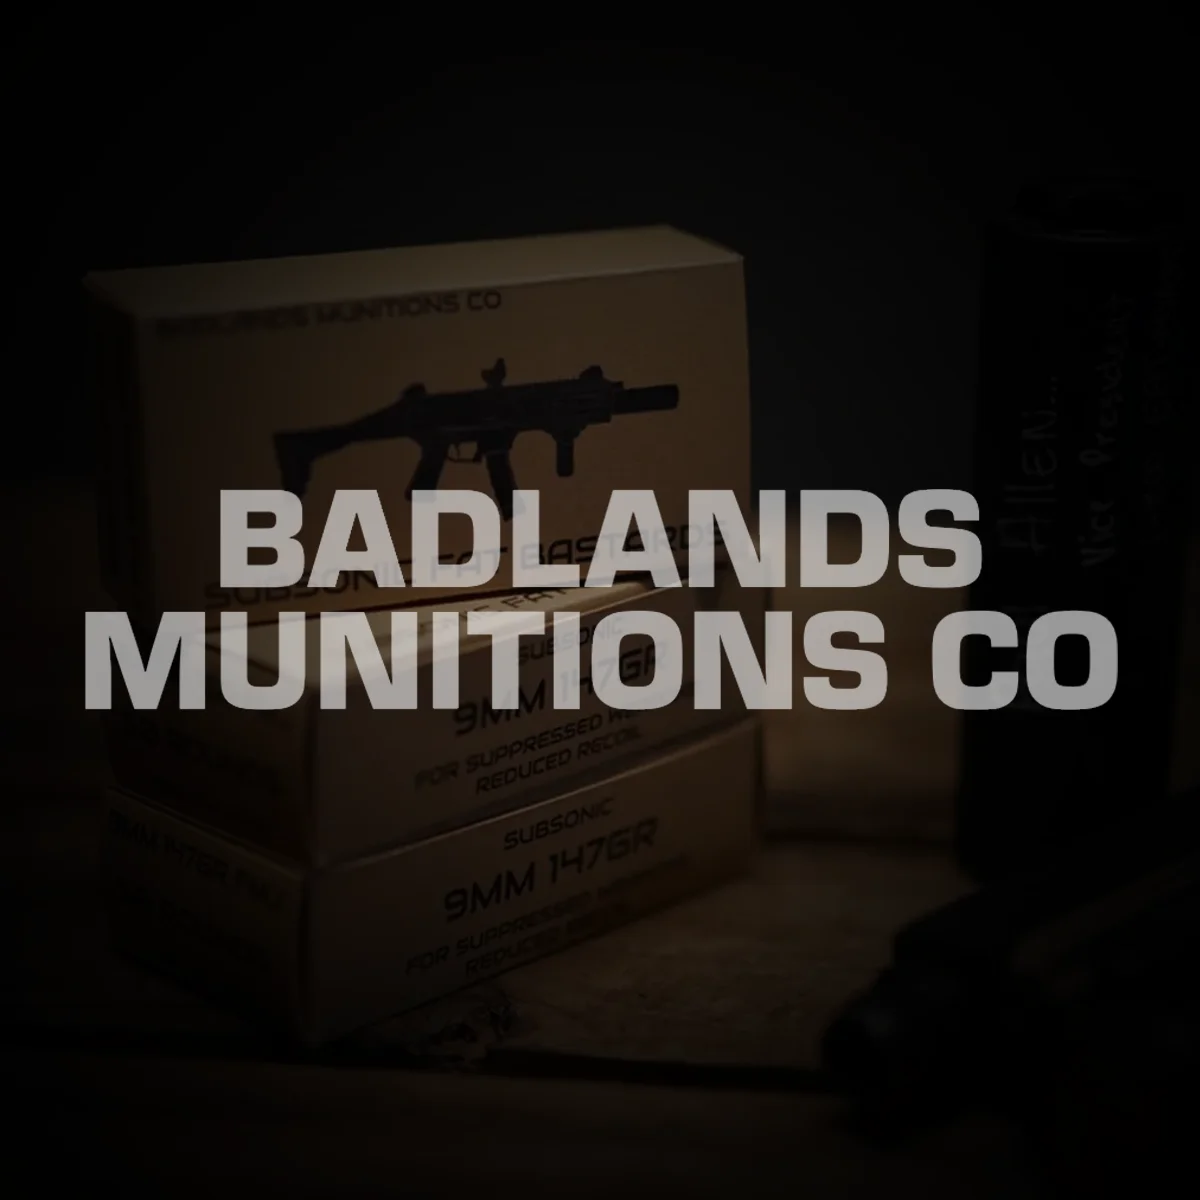 Badlands Munitions Co